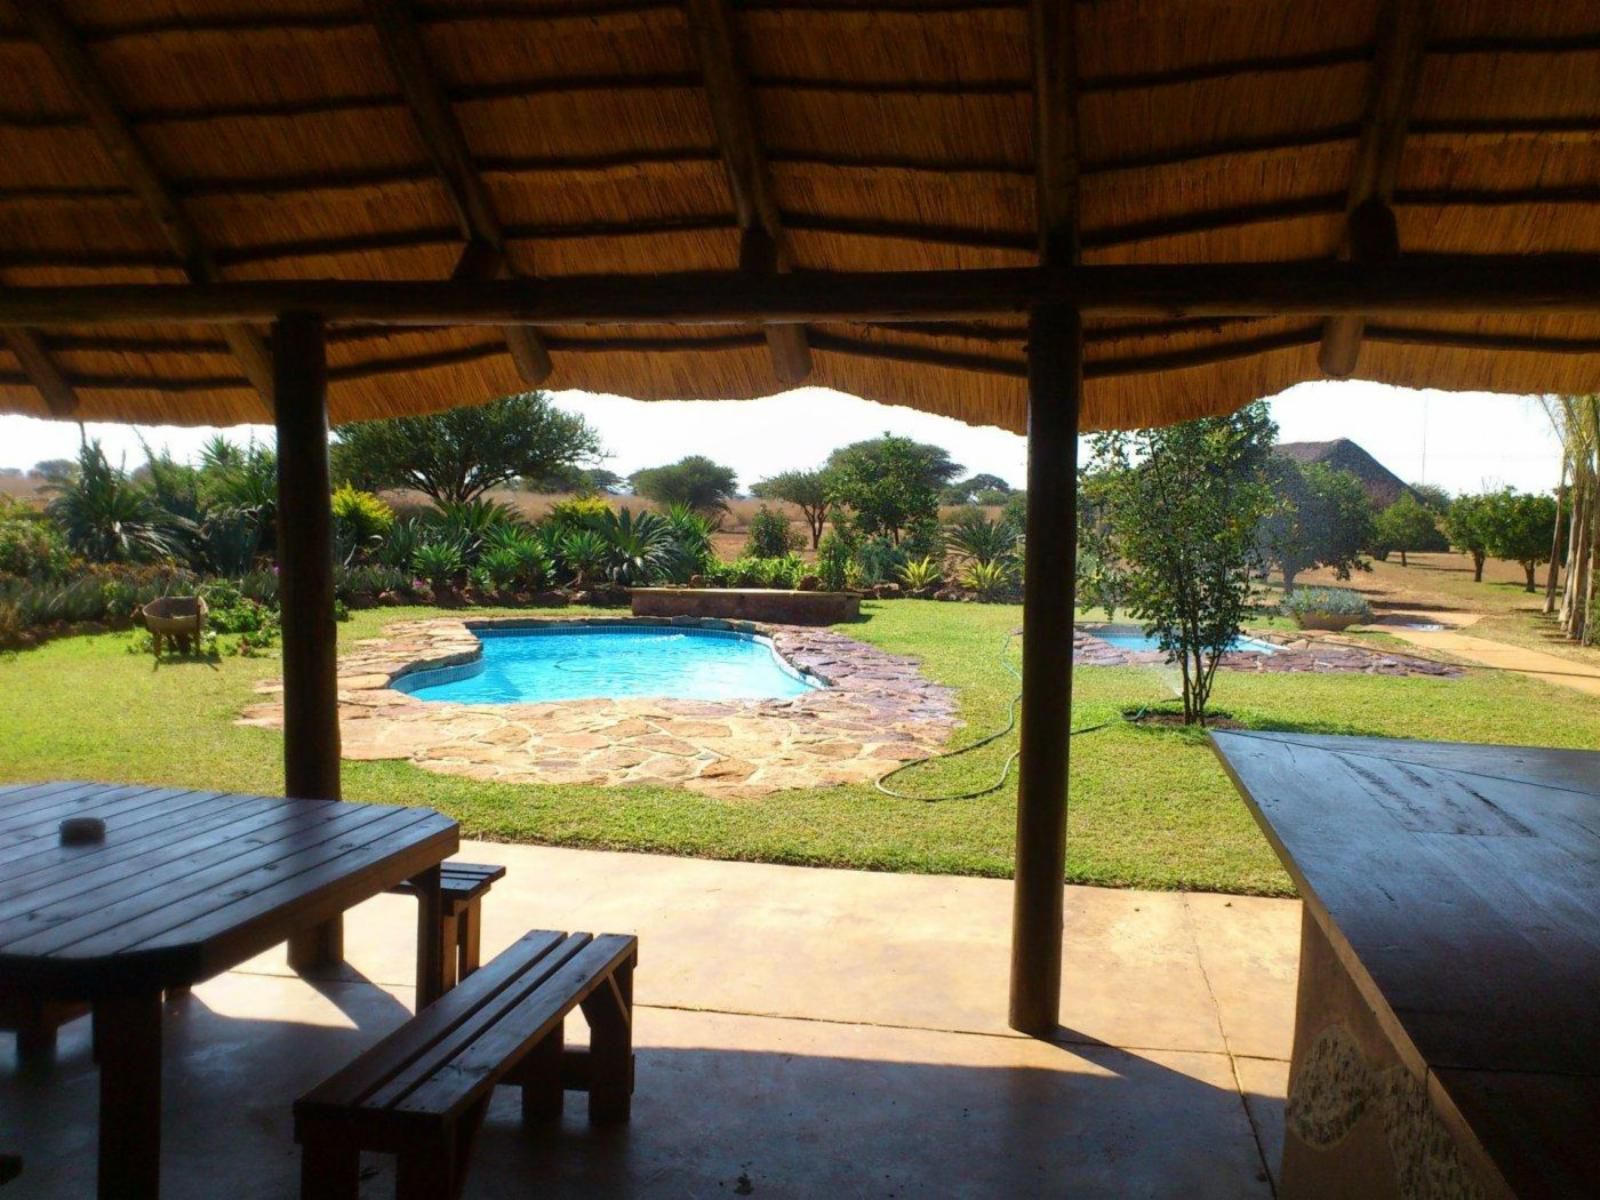 Gallery Inn Bela Bela Warmbaths Limpopo Province South Africa Swimming Pool